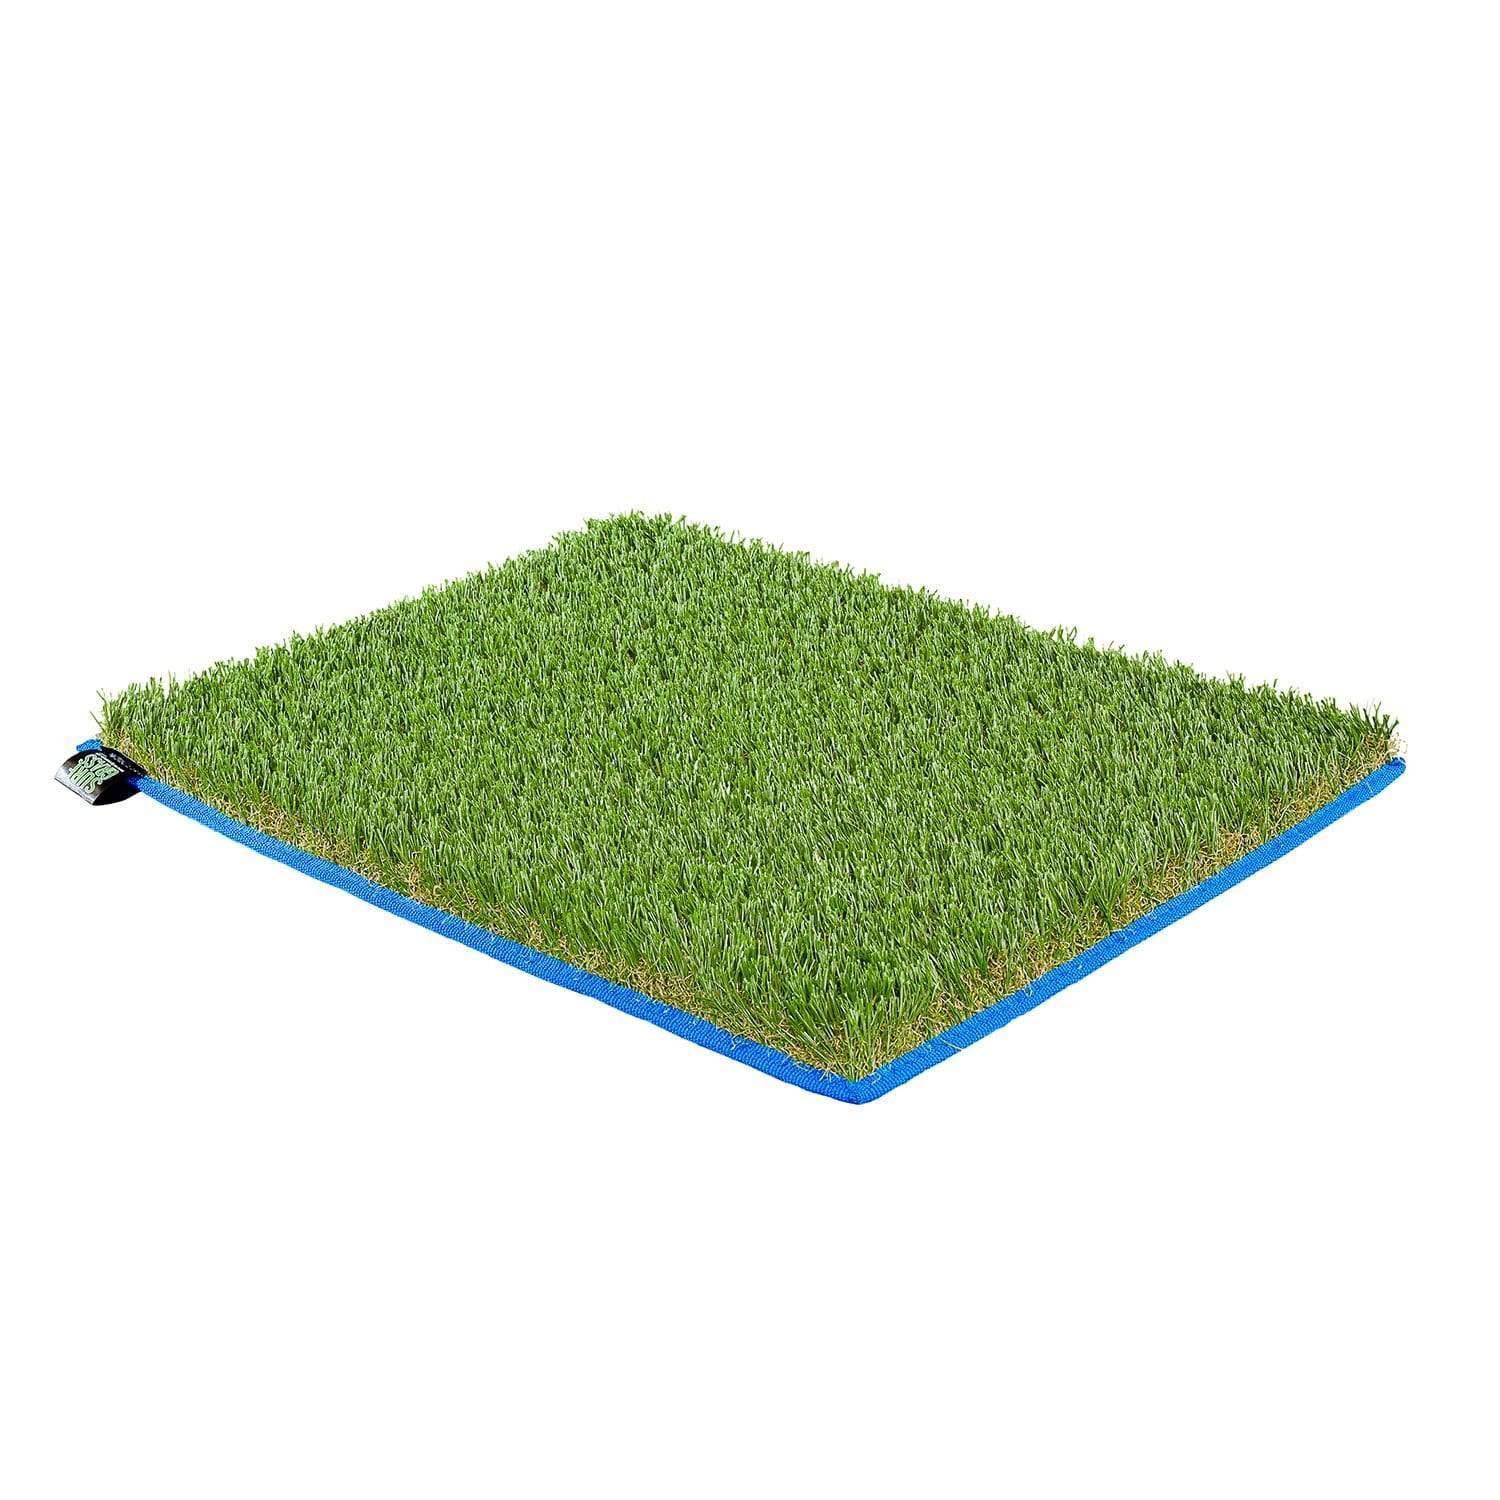 SURF GRASS MAT - BaseCamp Provisions